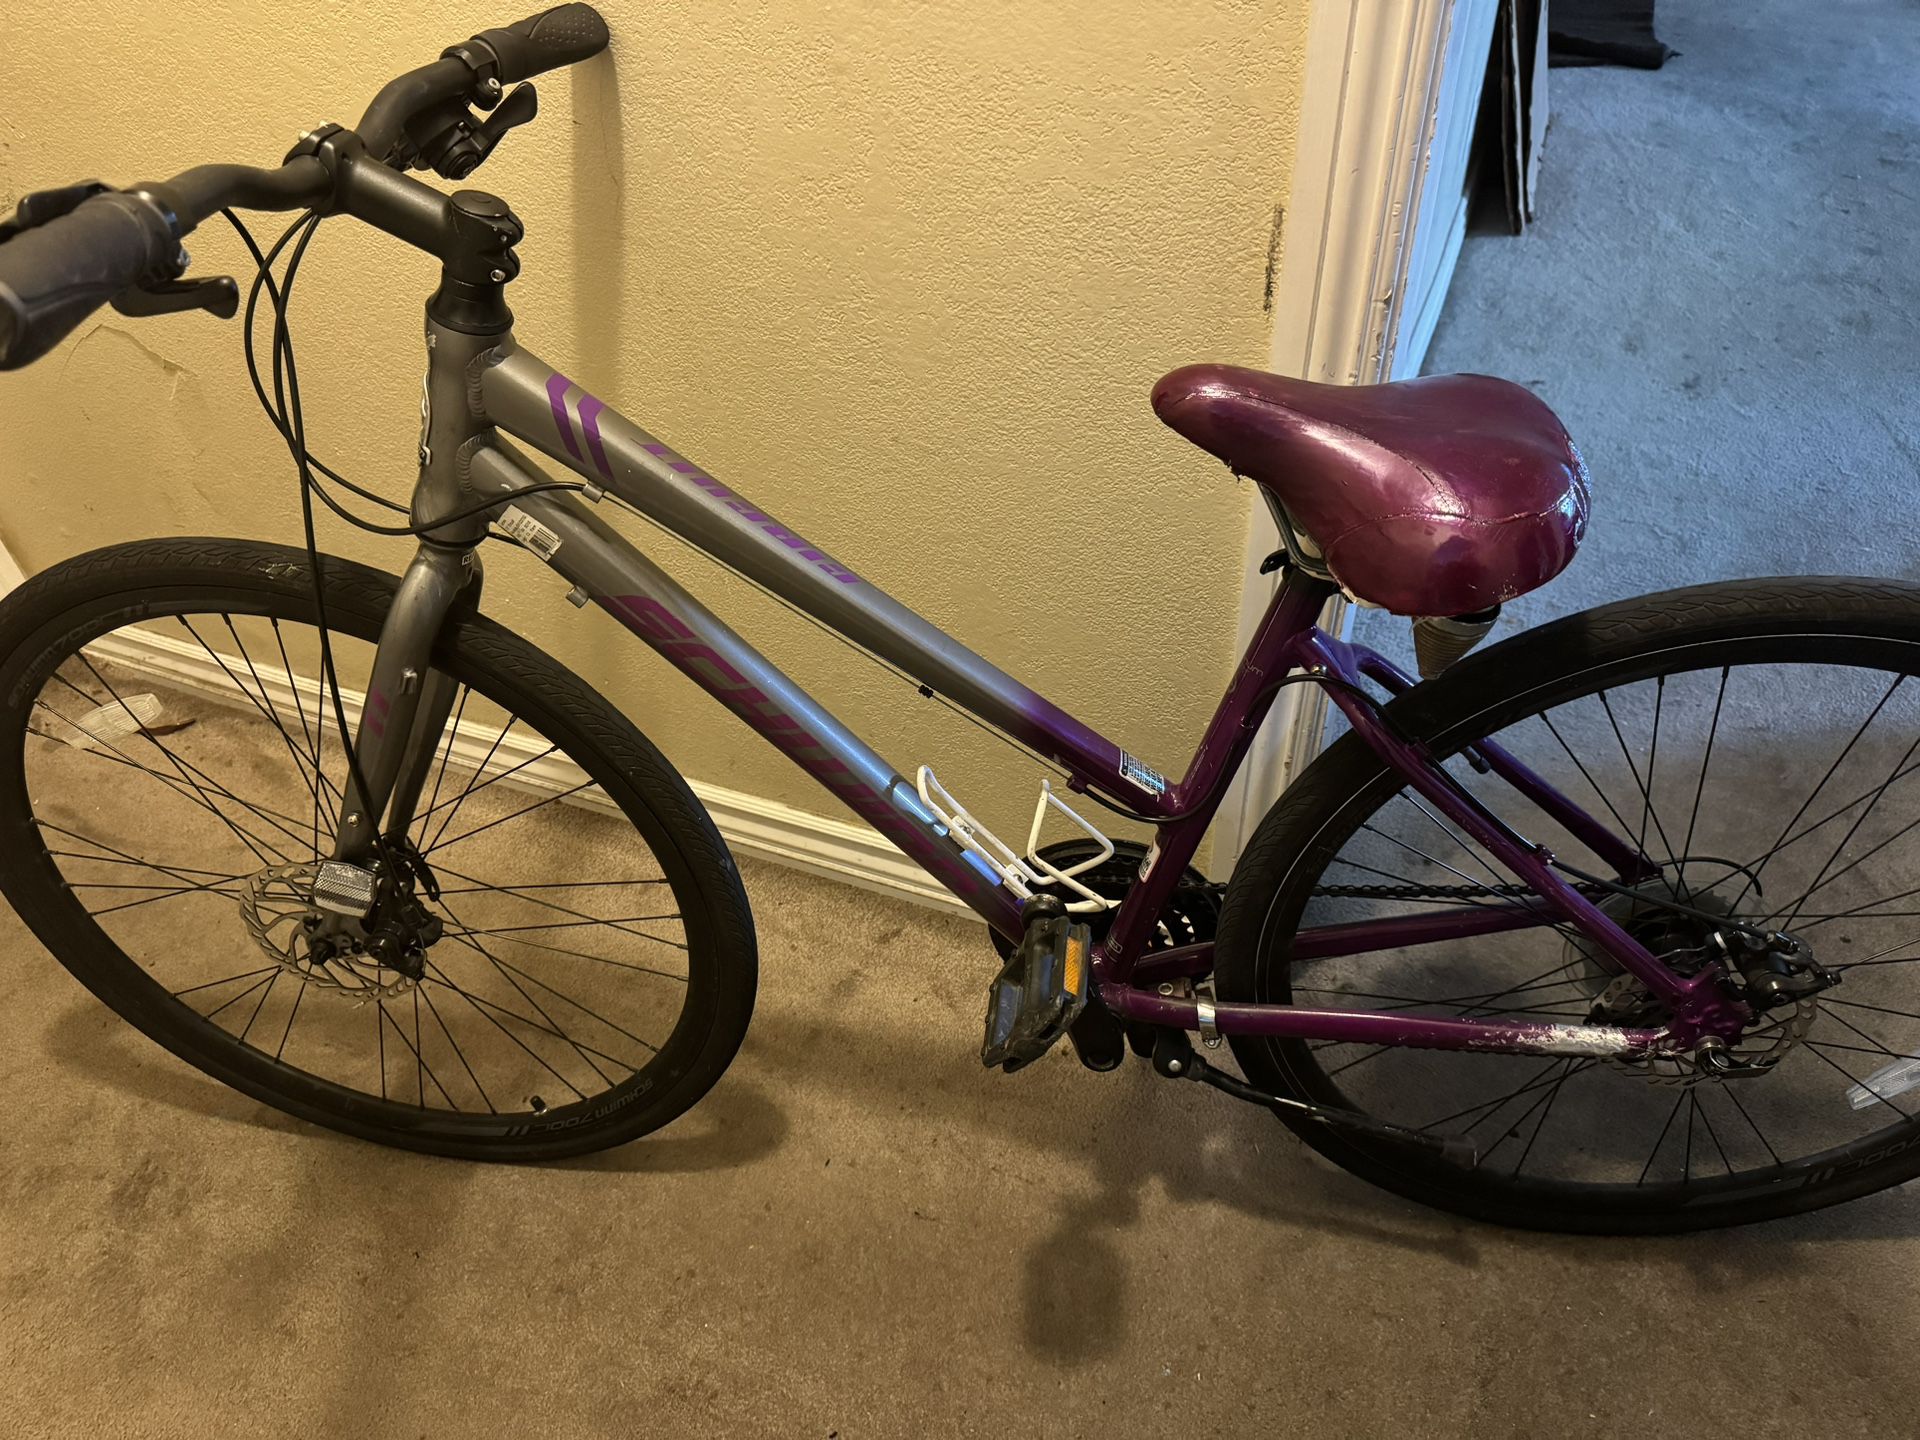 Schwinn Women’s Bicycle $65 Hybrid